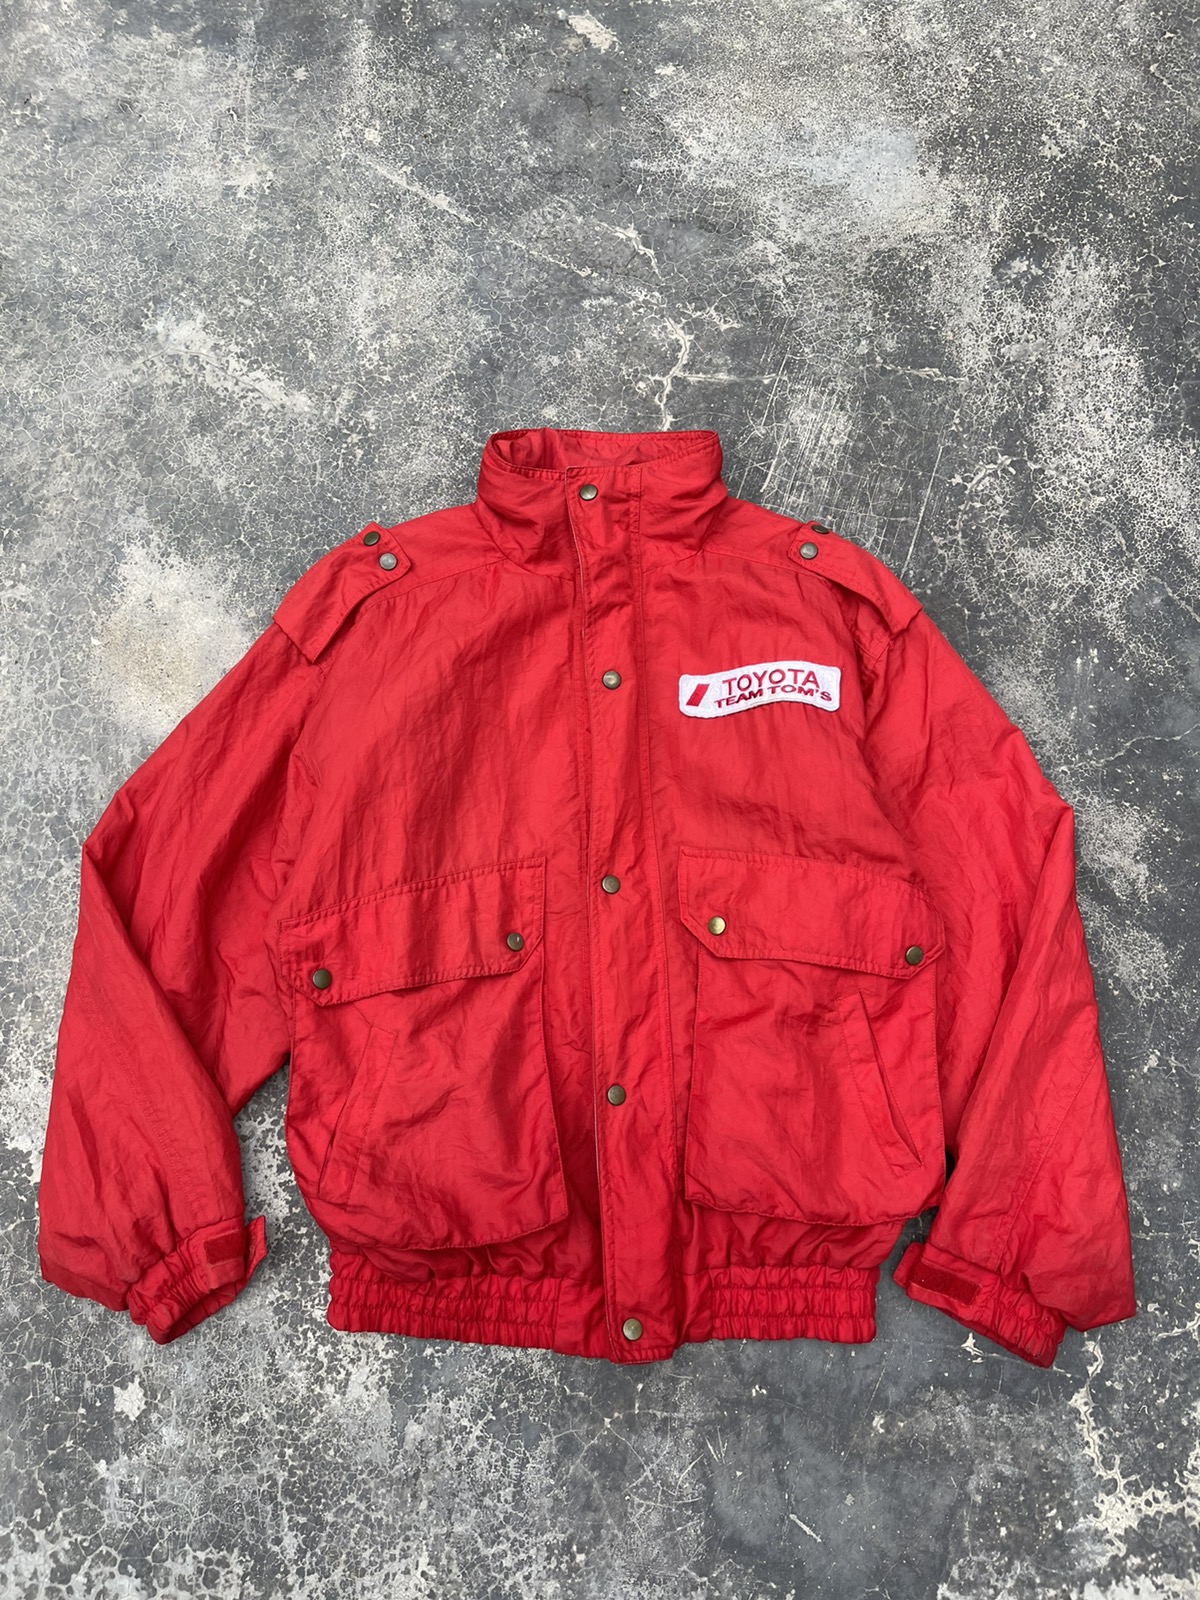 Vintage - 80s Toyota Team Tom’s red light perfomance racing jacket